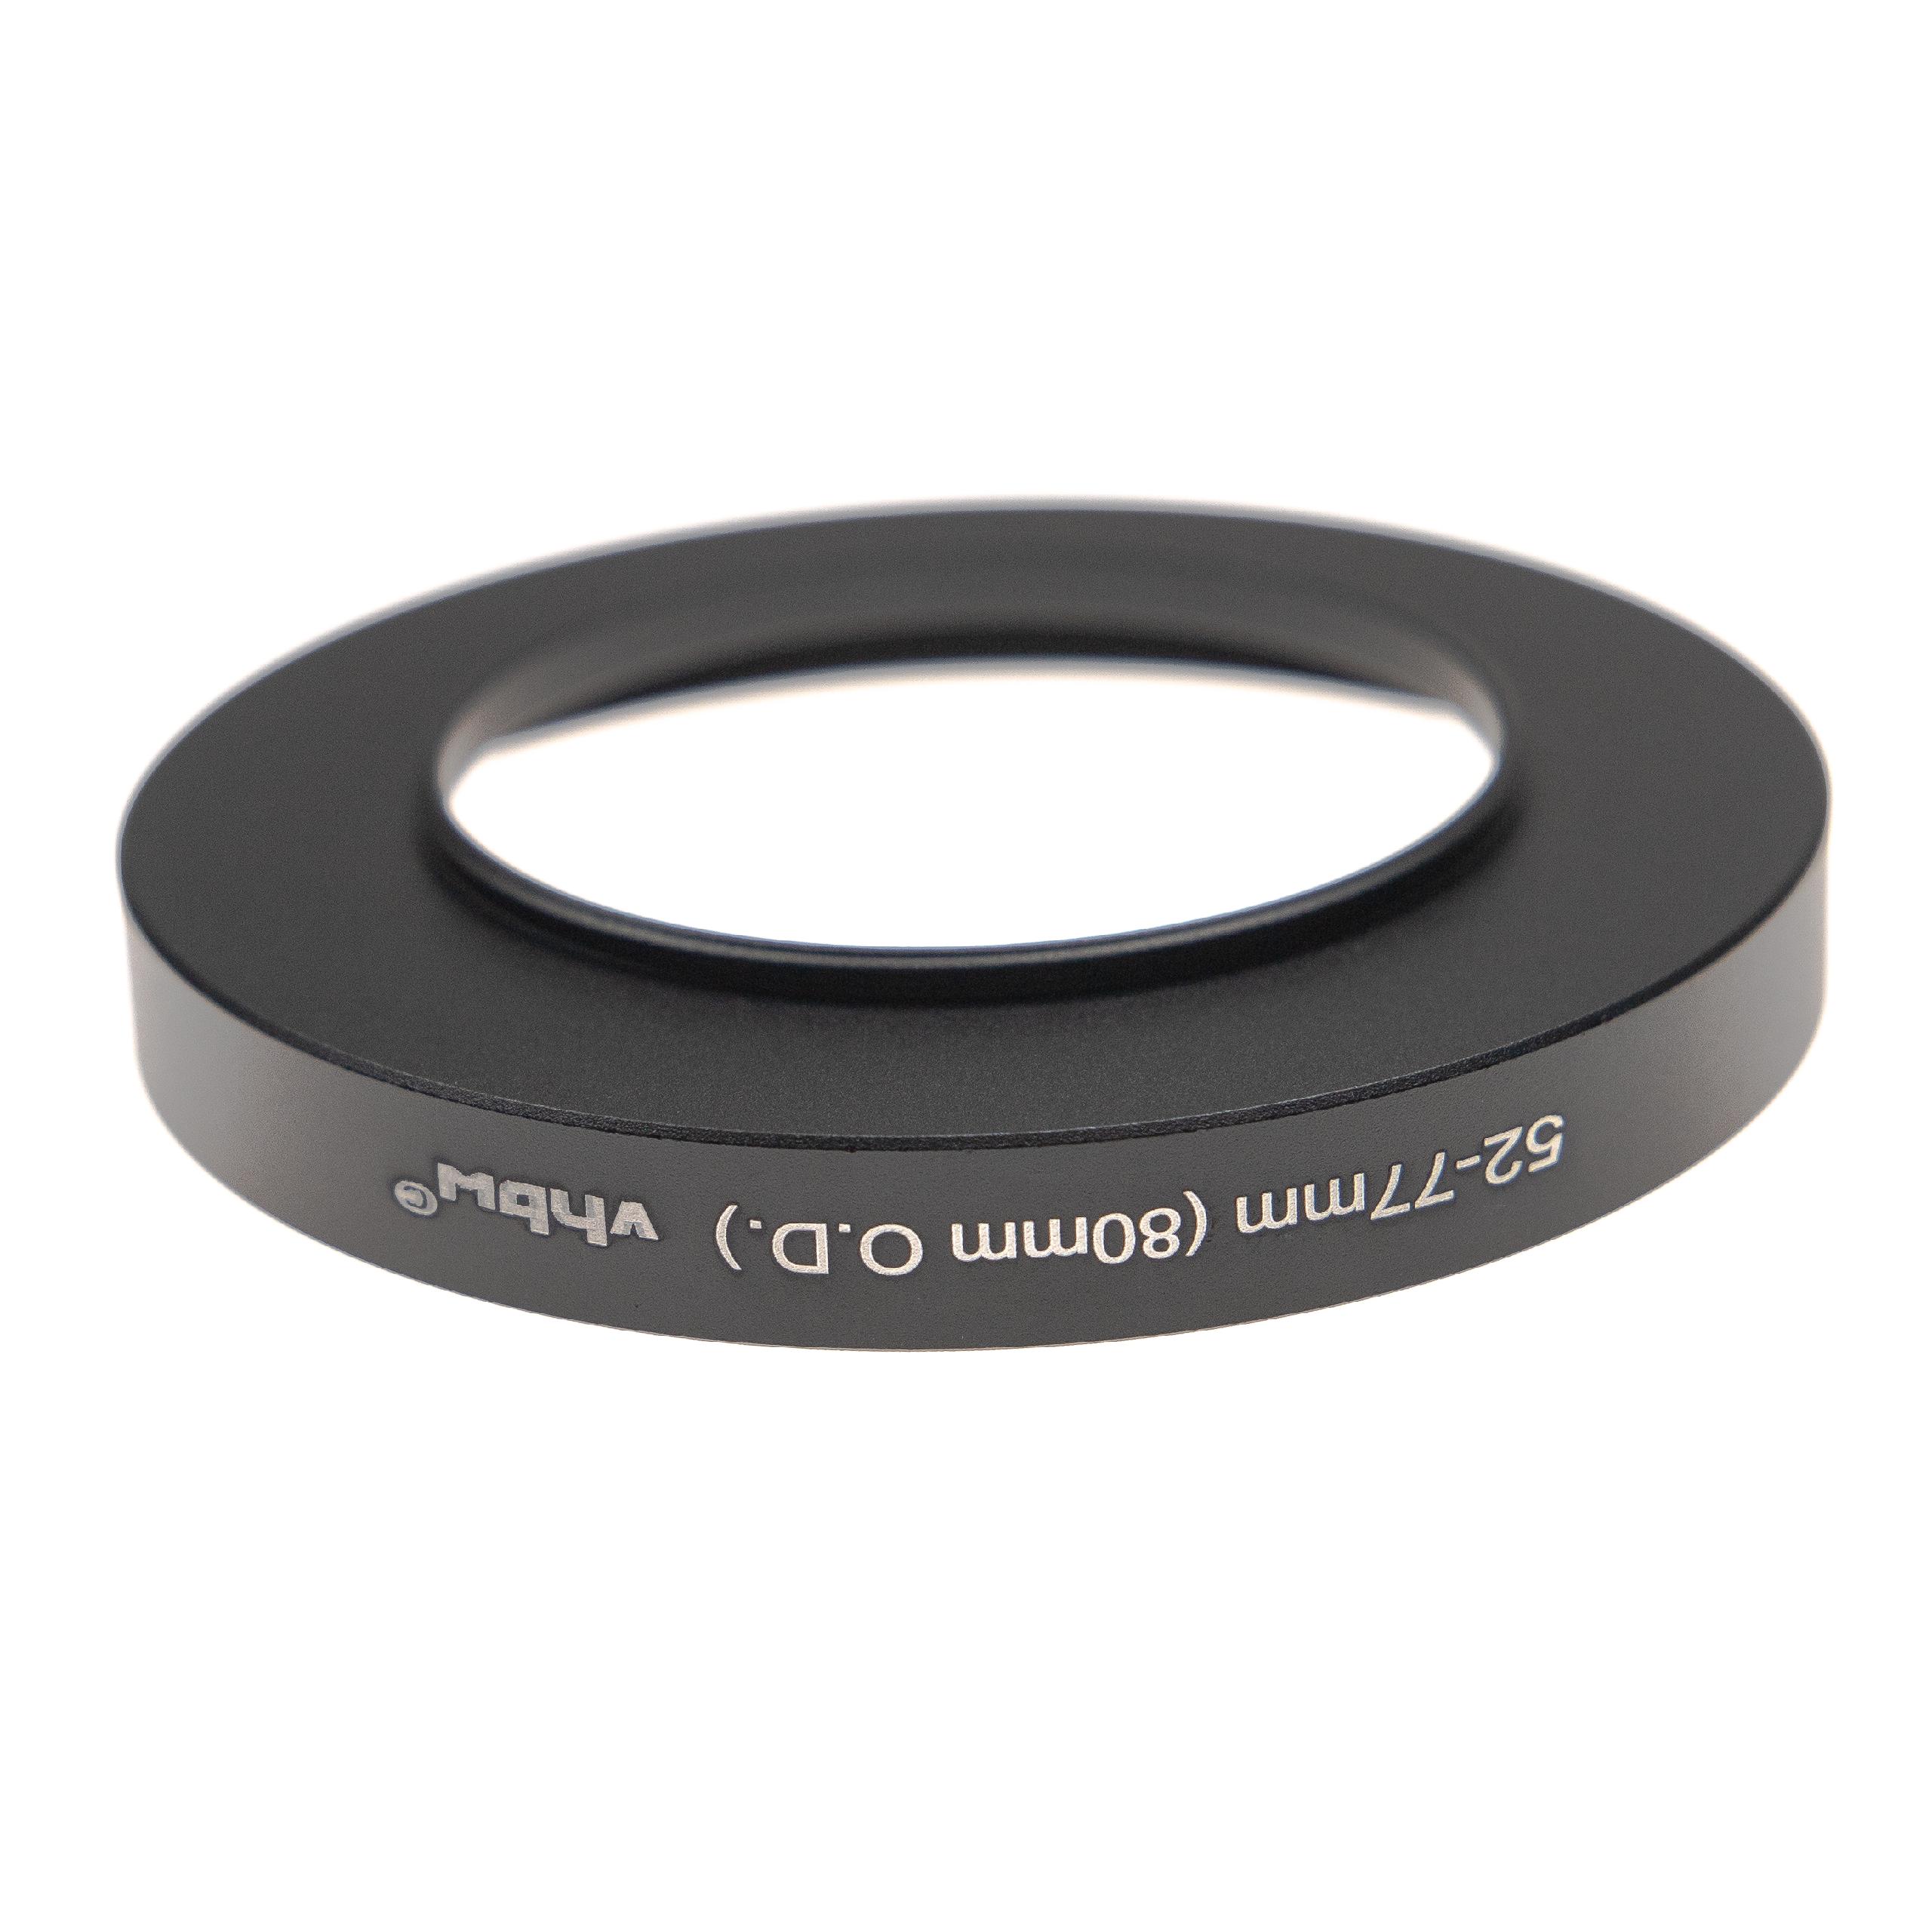 Step-Up-Ring Adapter 52 mm auf 77 mm passend für Matte Boxen 80 mm O.D. - Filteradapter